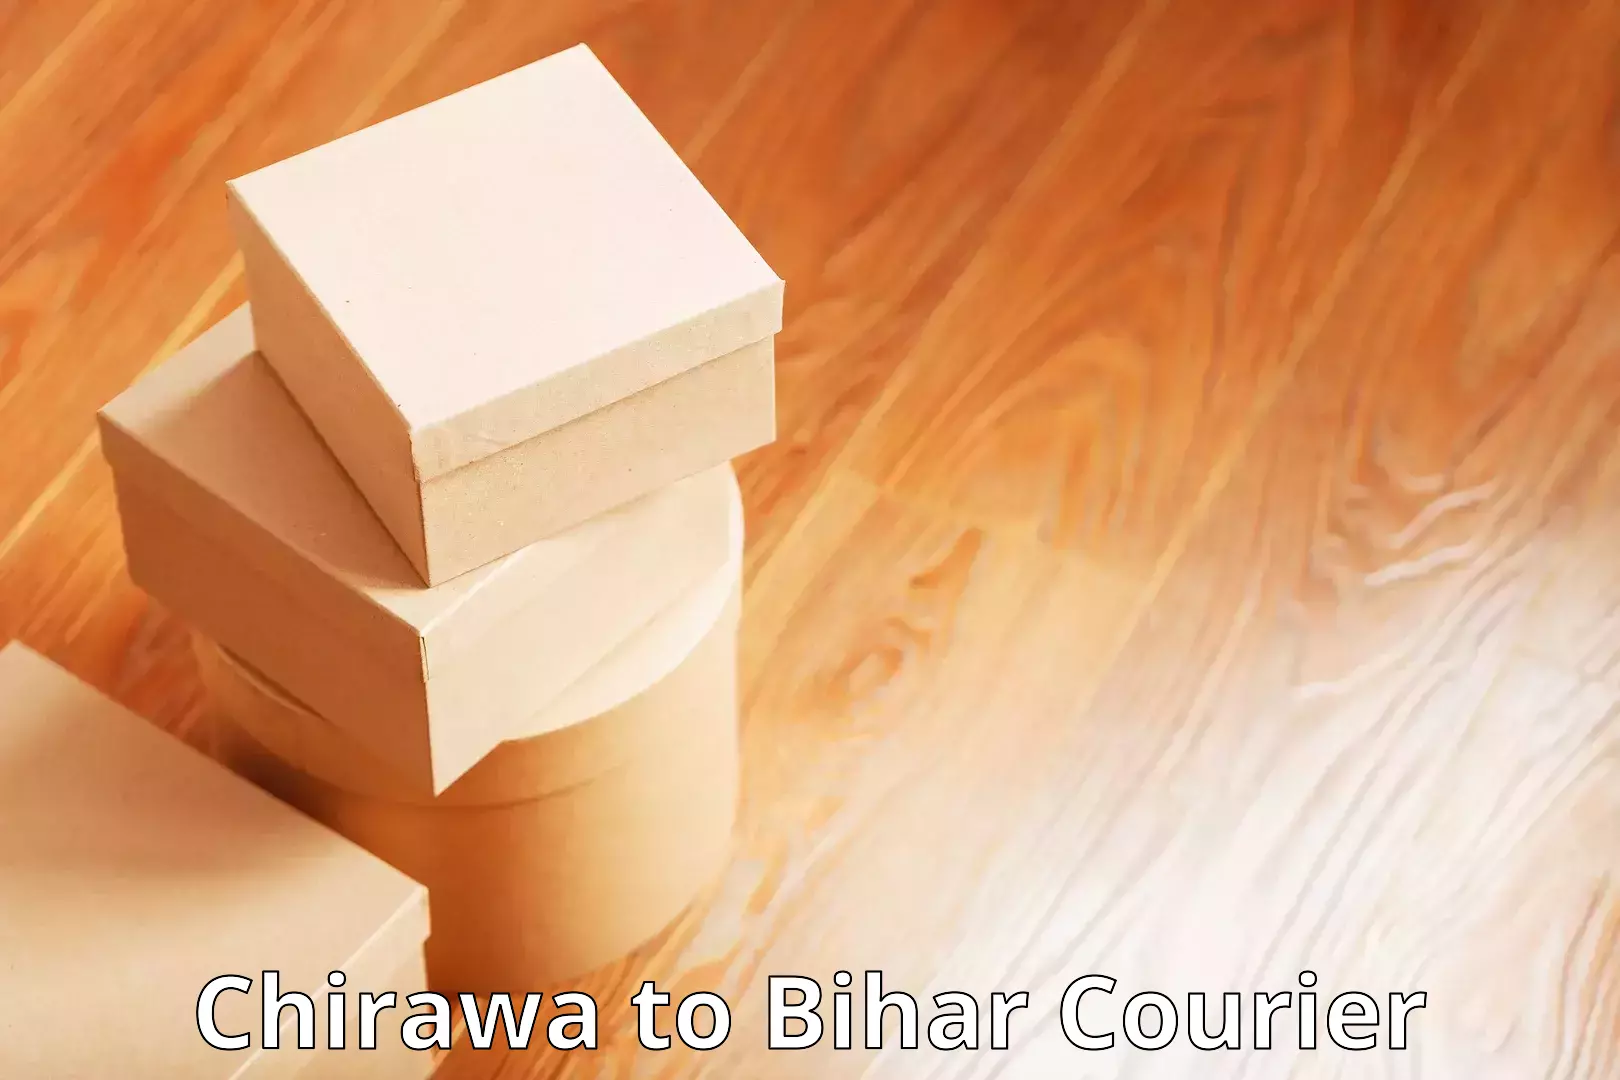 Global shipping networks Chirawa to Bihar